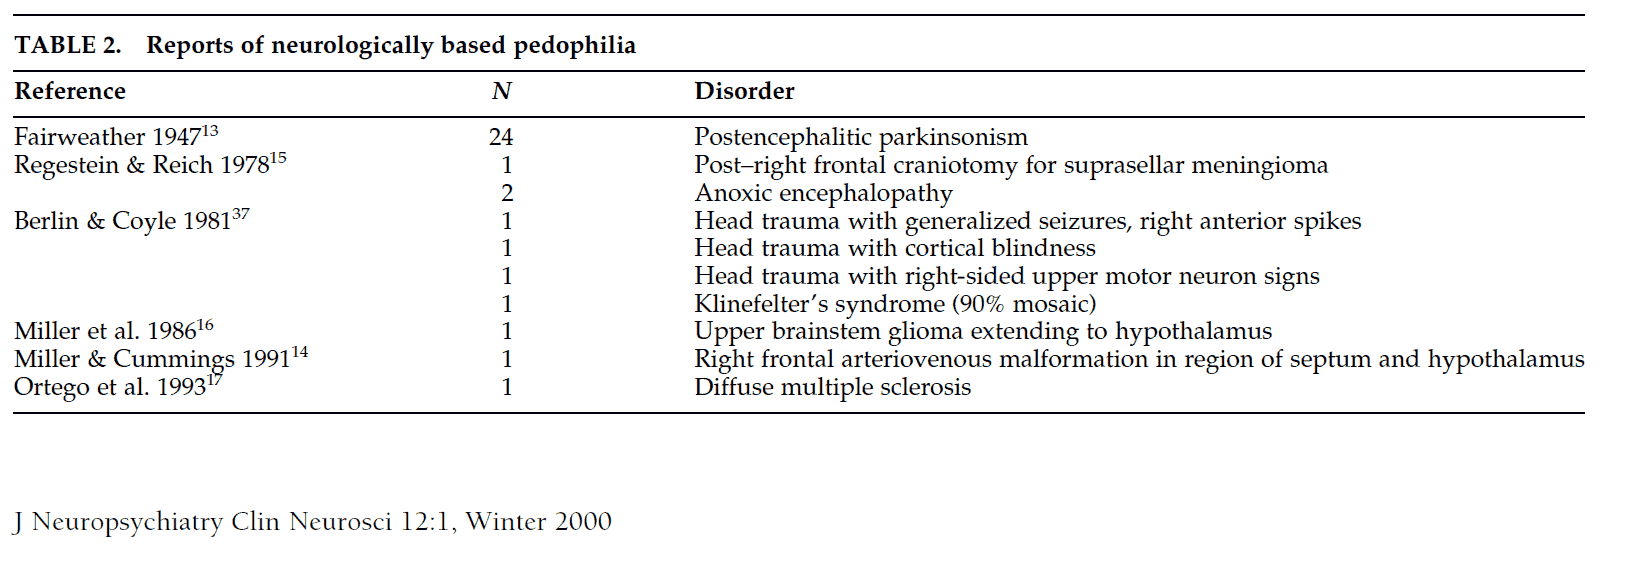 Neurologisk baserad pedofili